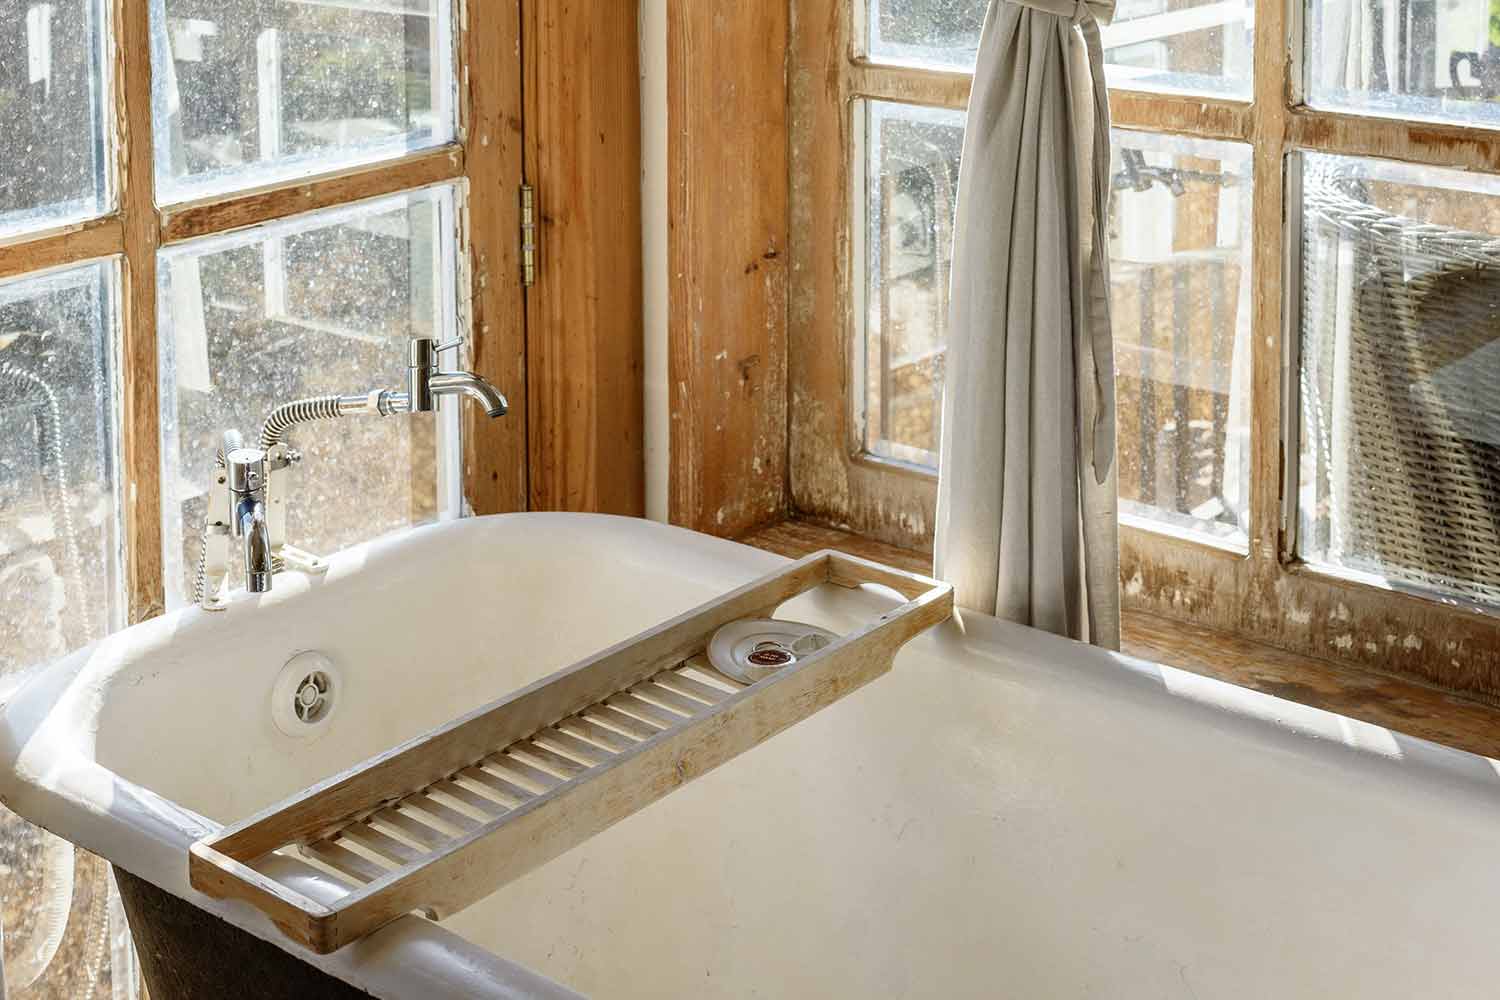 How To Plug An Overflow Drain In Bathtub?